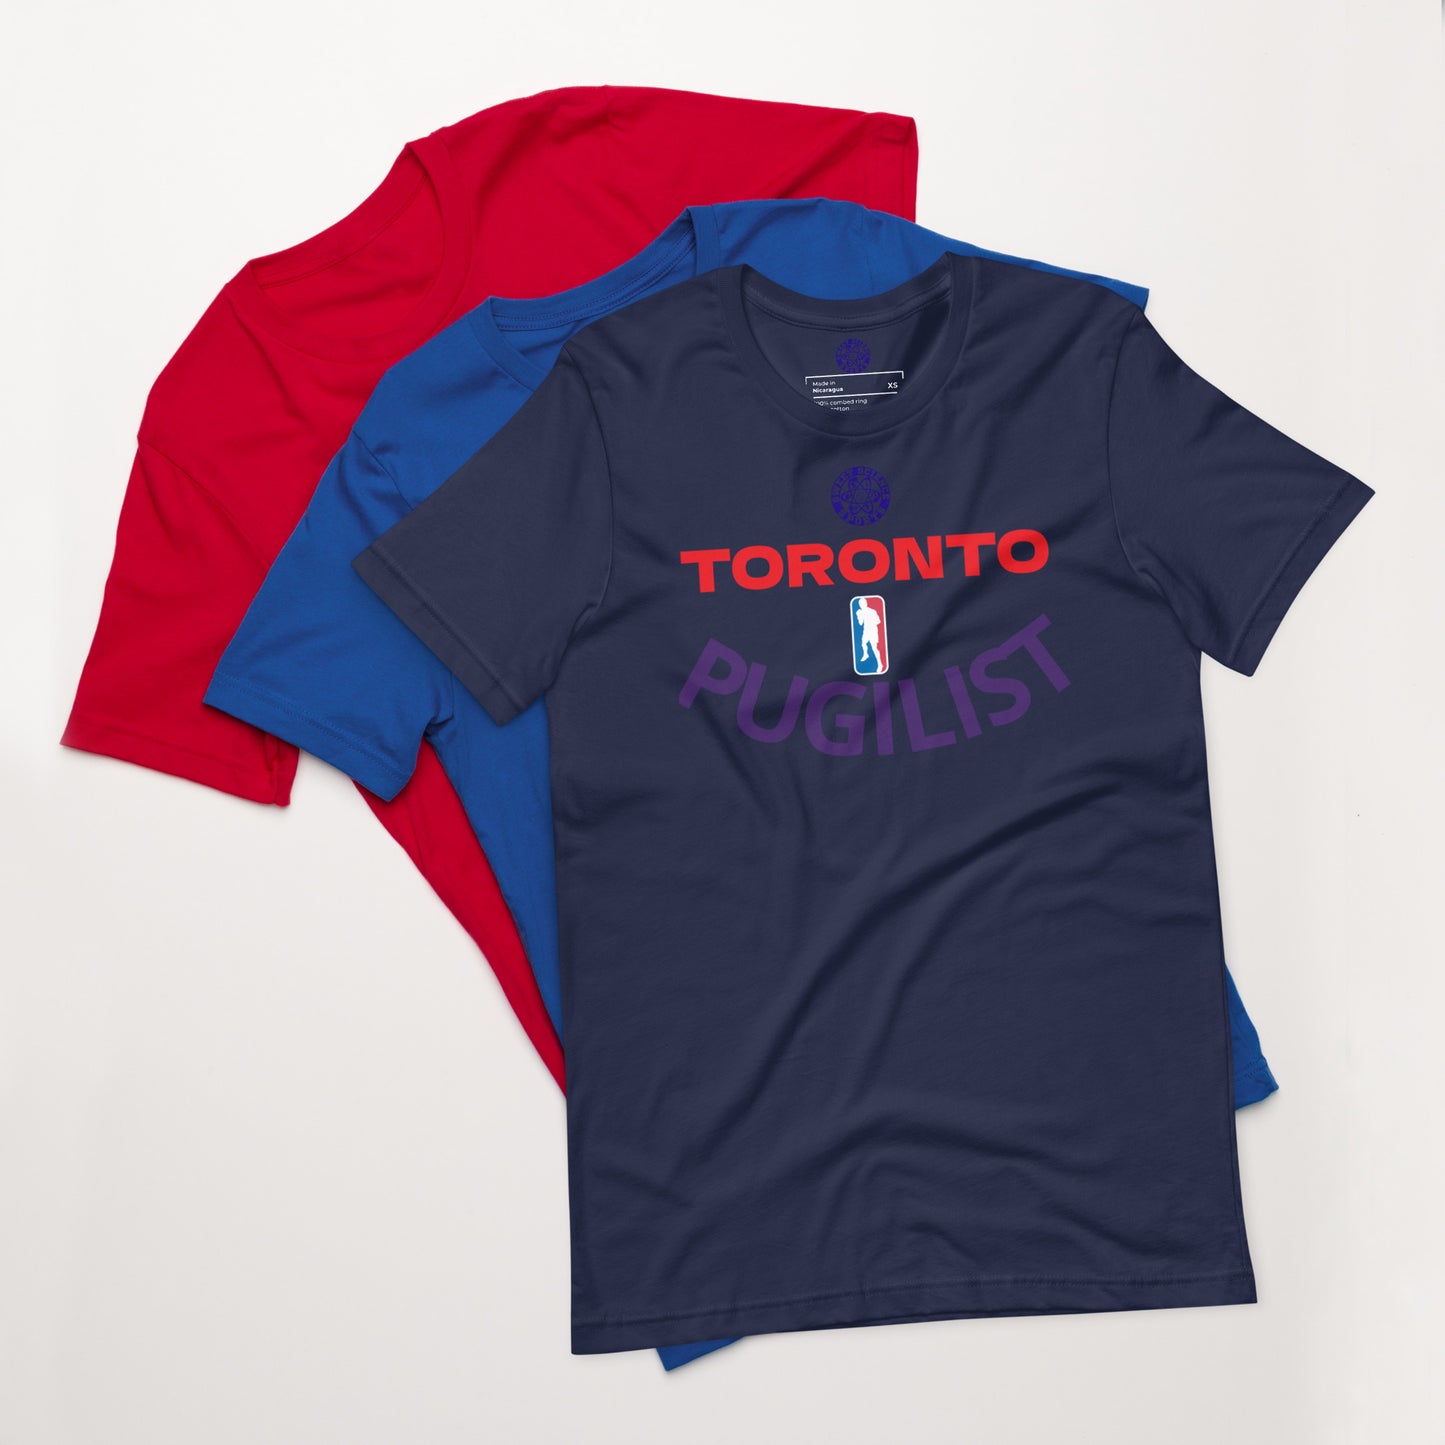 Toronto Pugilist  t-shirt